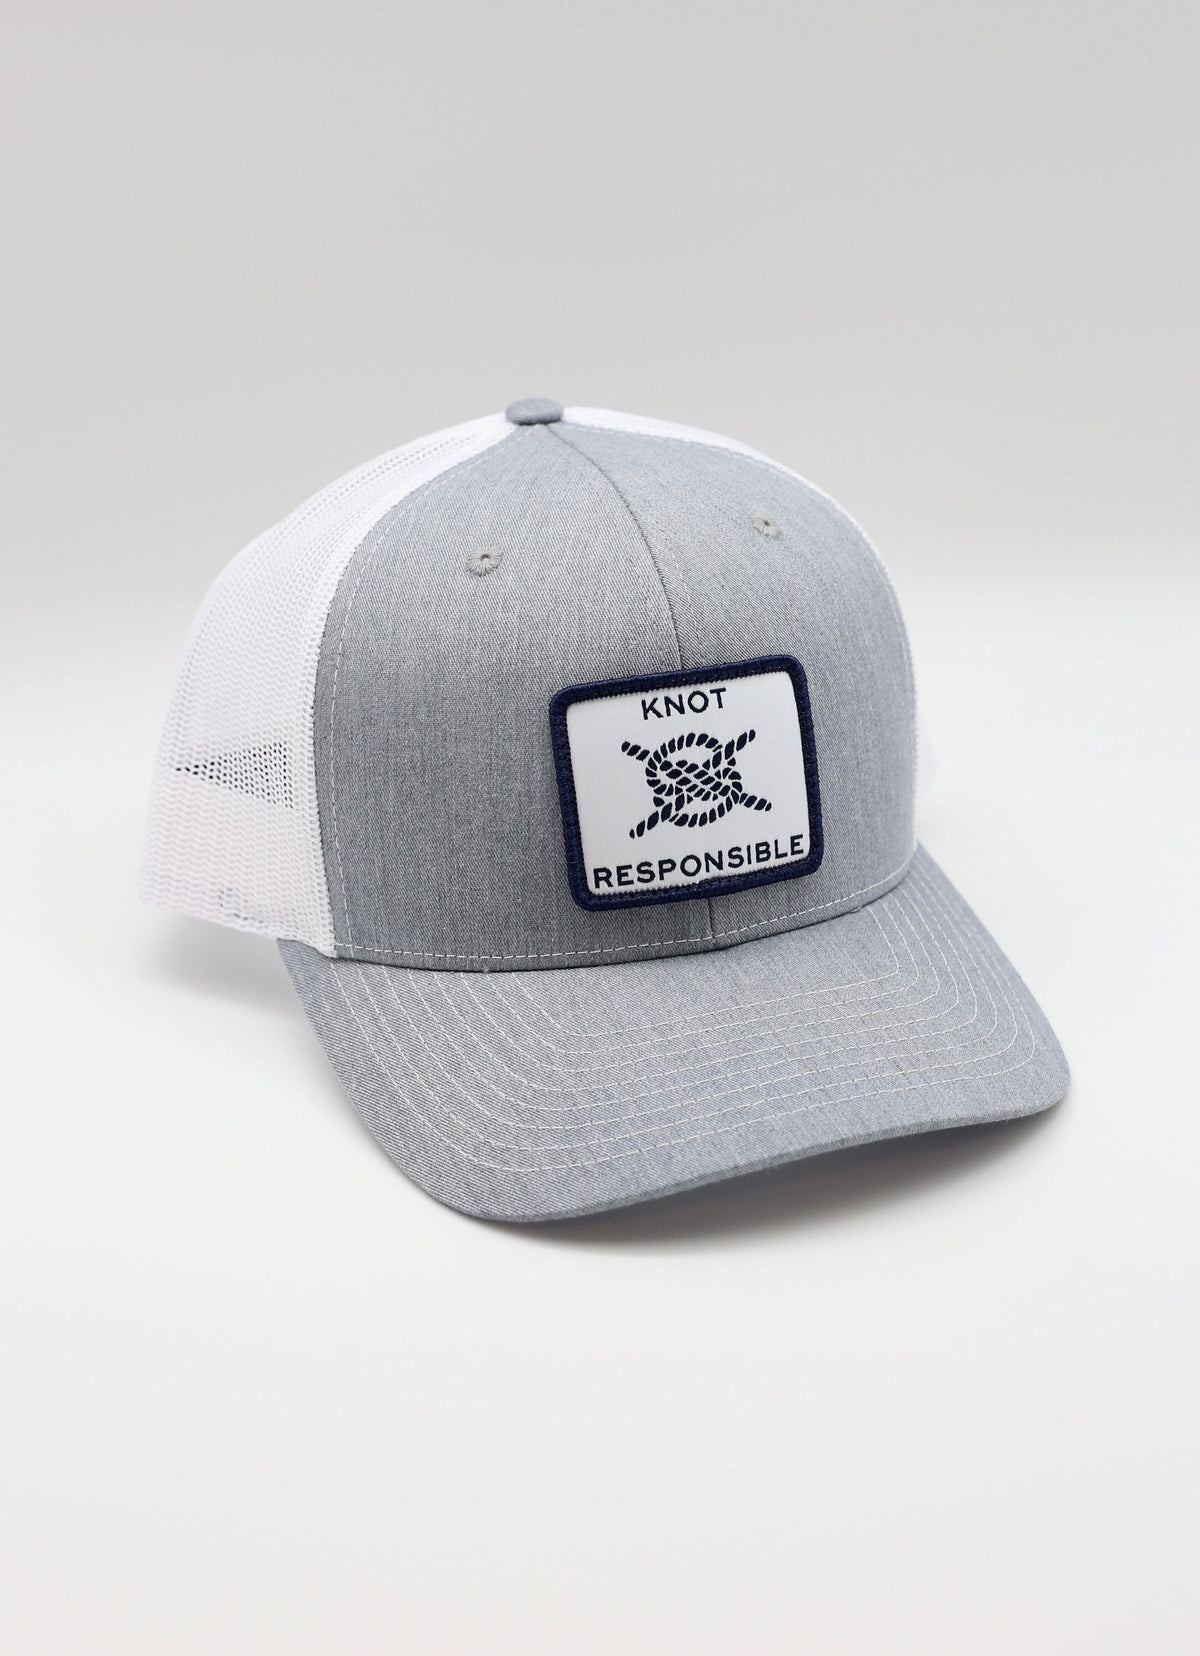 Extra Large Original Trucker Hat- Heather Grey/White – Knot Responsible